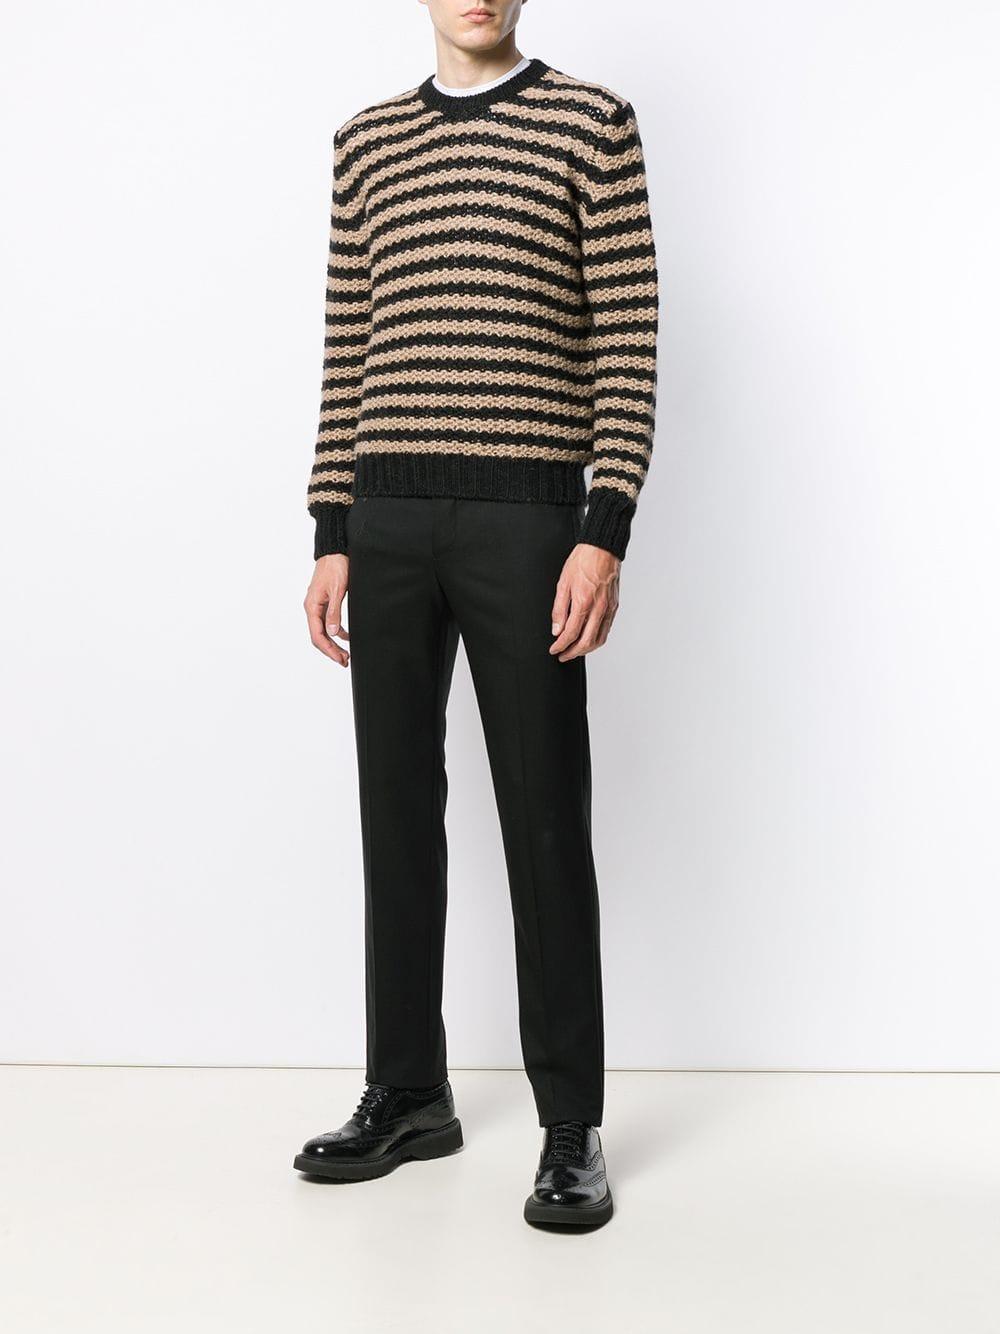 Prada Wool Striped Knitted Jumper in Black for Men - Lyst